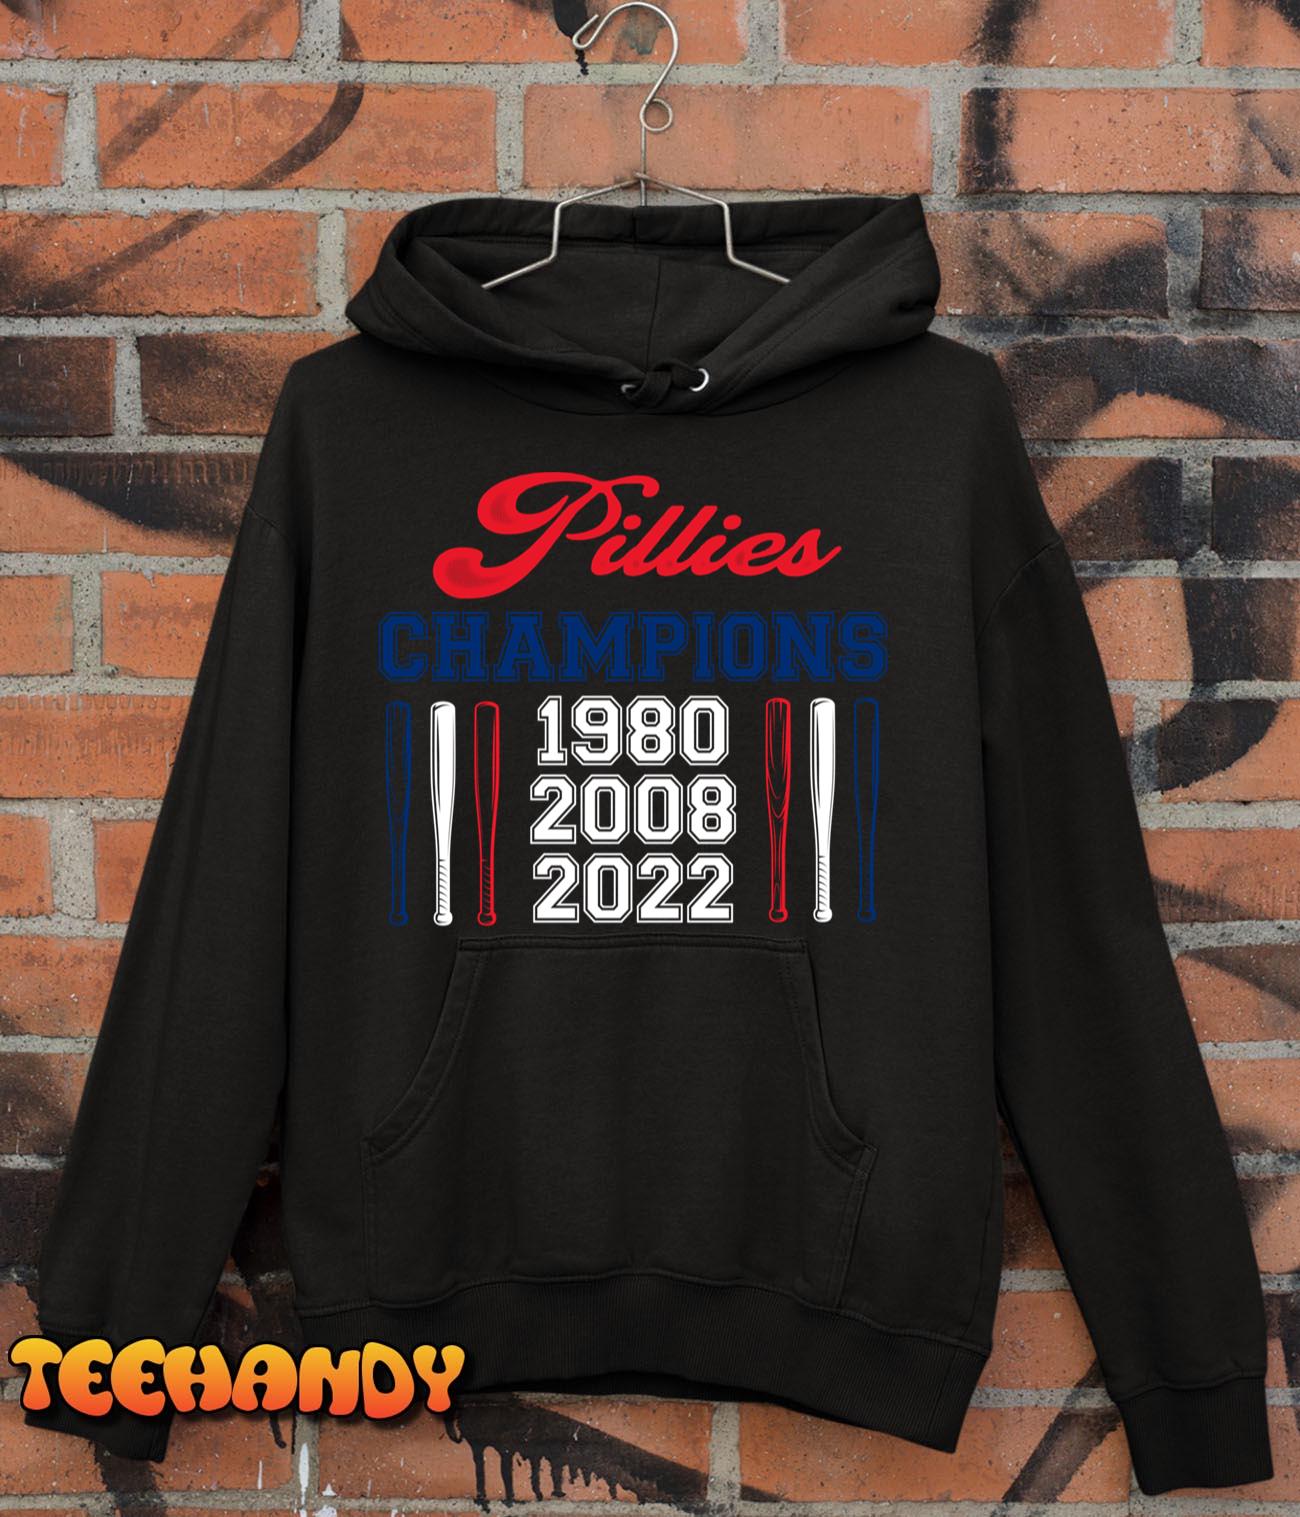 Phillies Champion 1980 2008 2022 T-Shirt